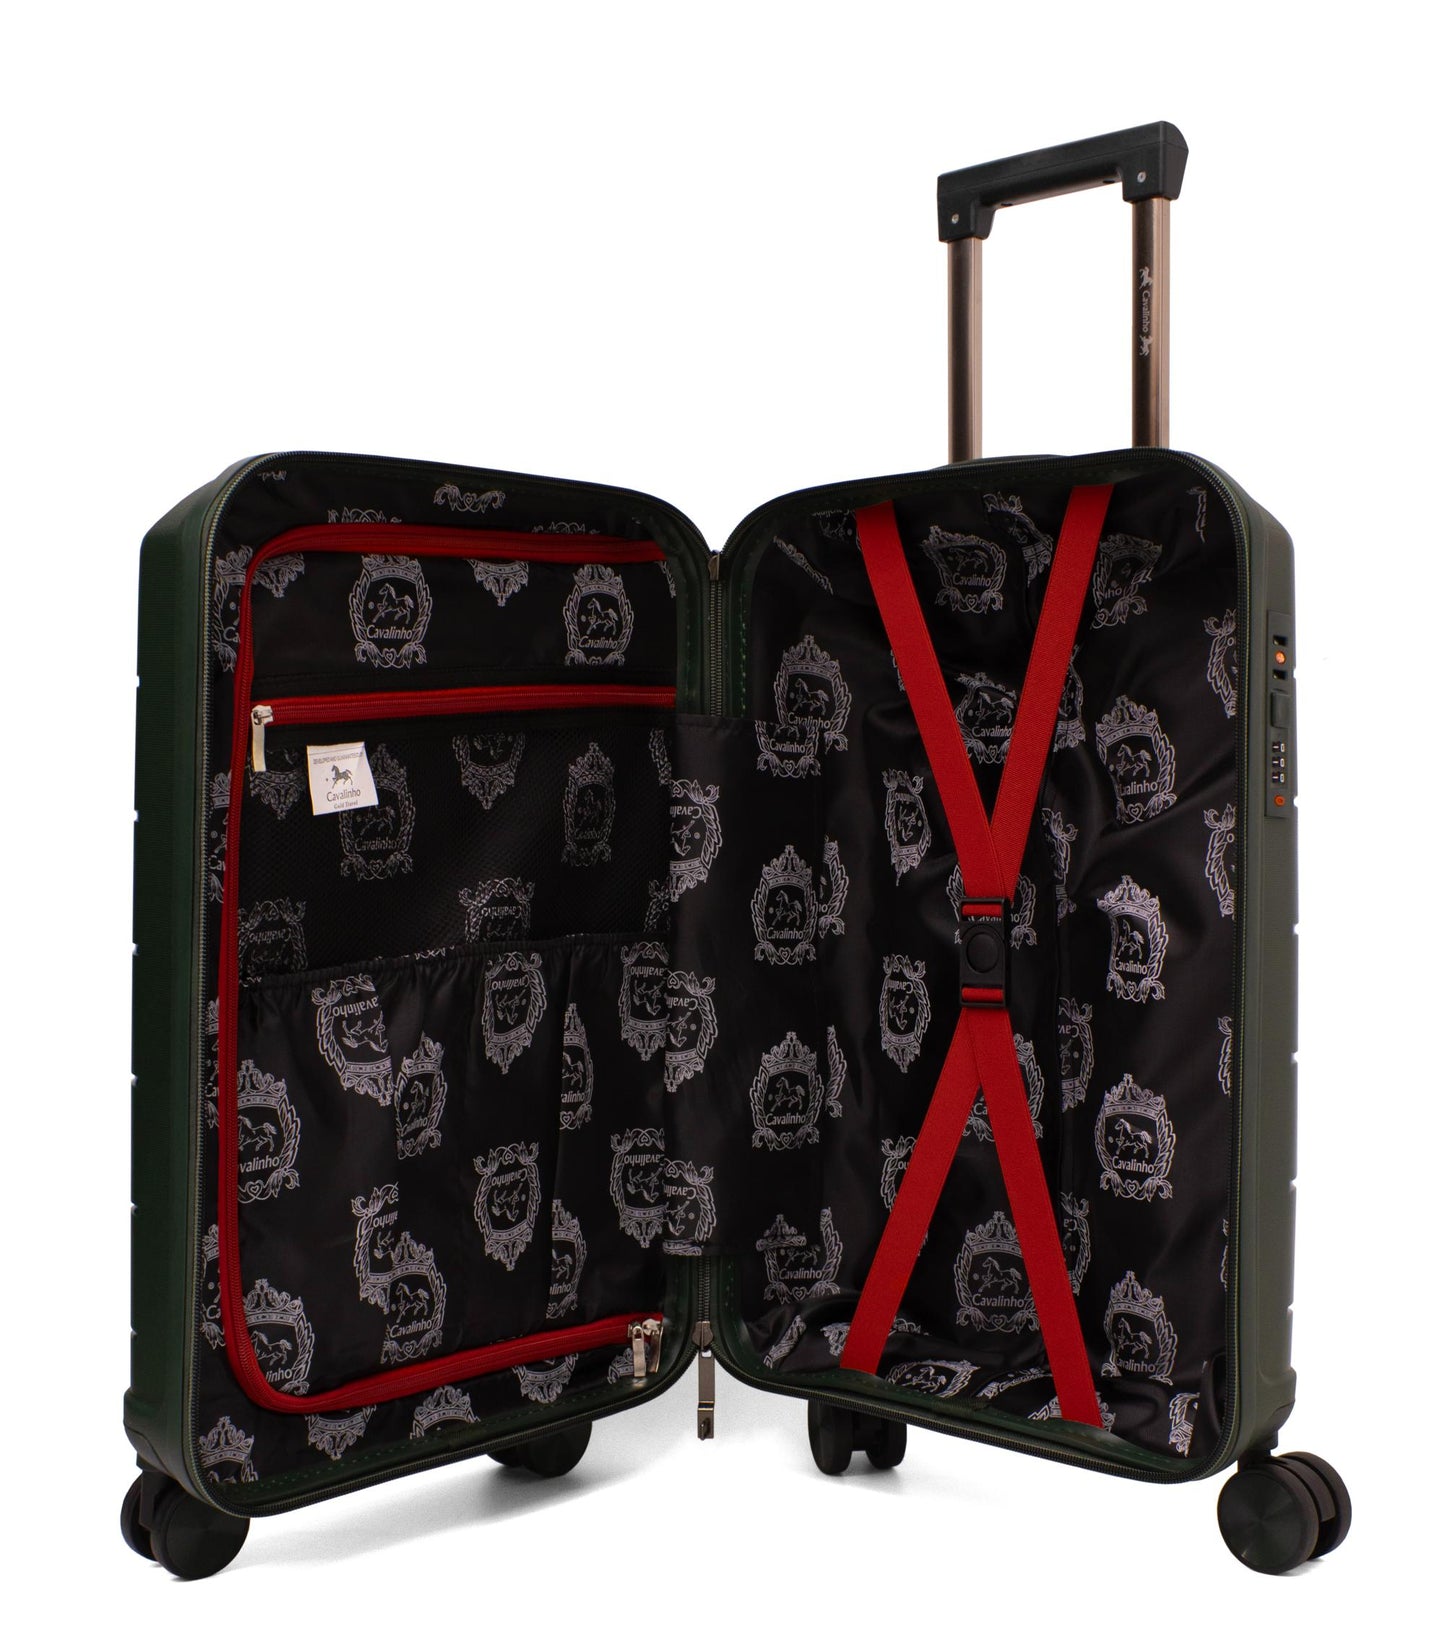 Cavalinho Oasis Carry-on Hardside Luggage (20") - 20 inch DarkOliveGreen - 68040001.09.20_4